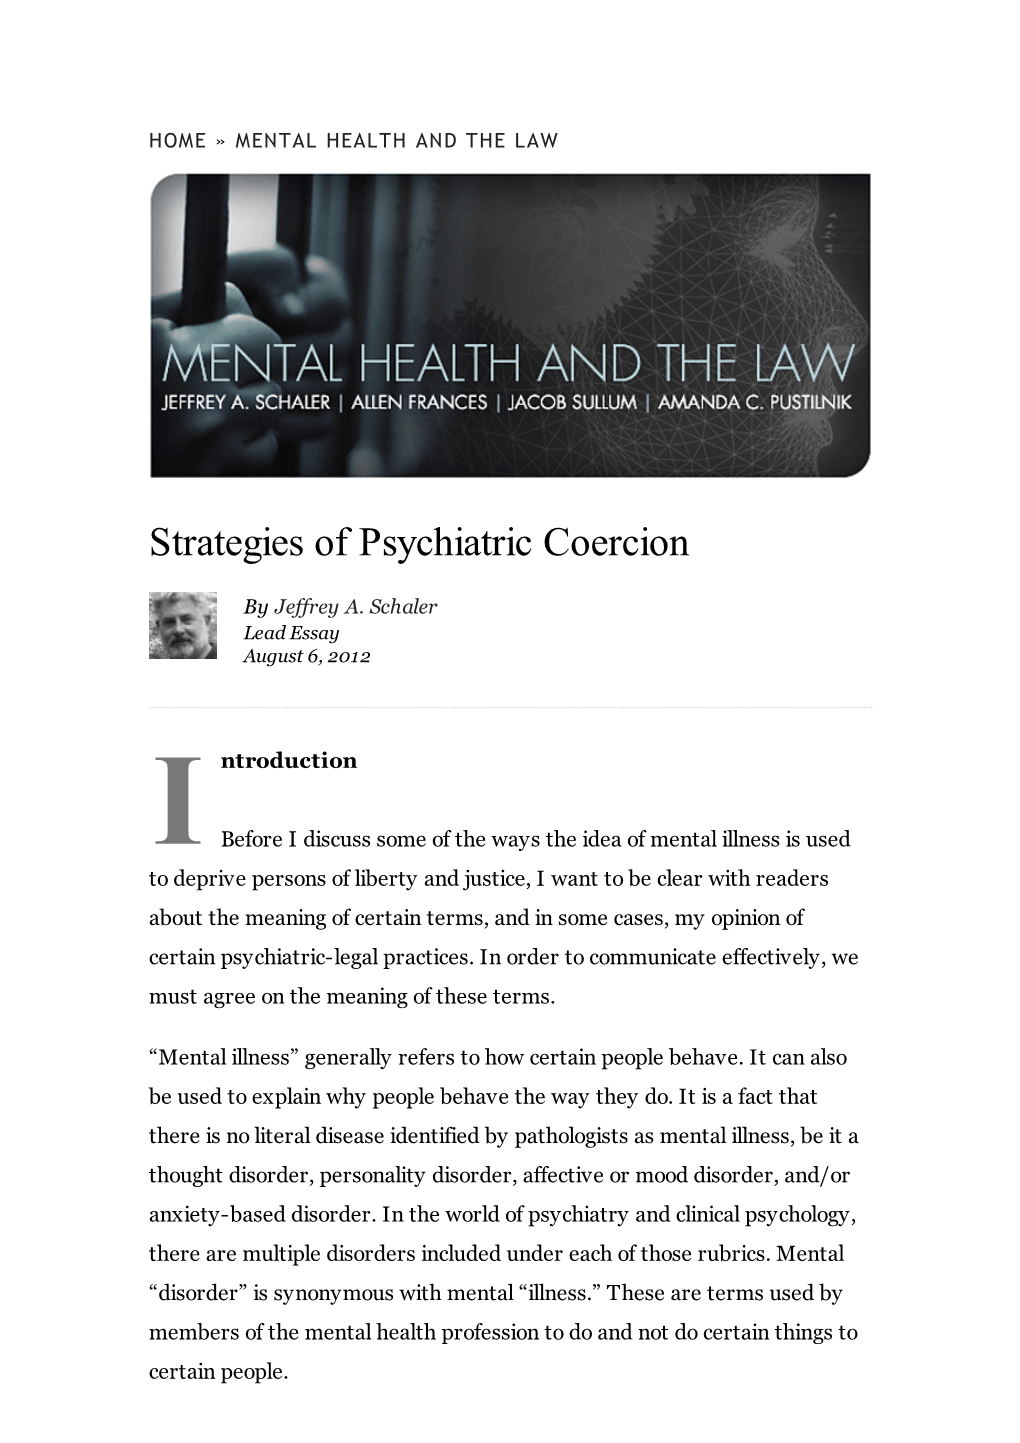 Strategies of Psychiatric Coercion